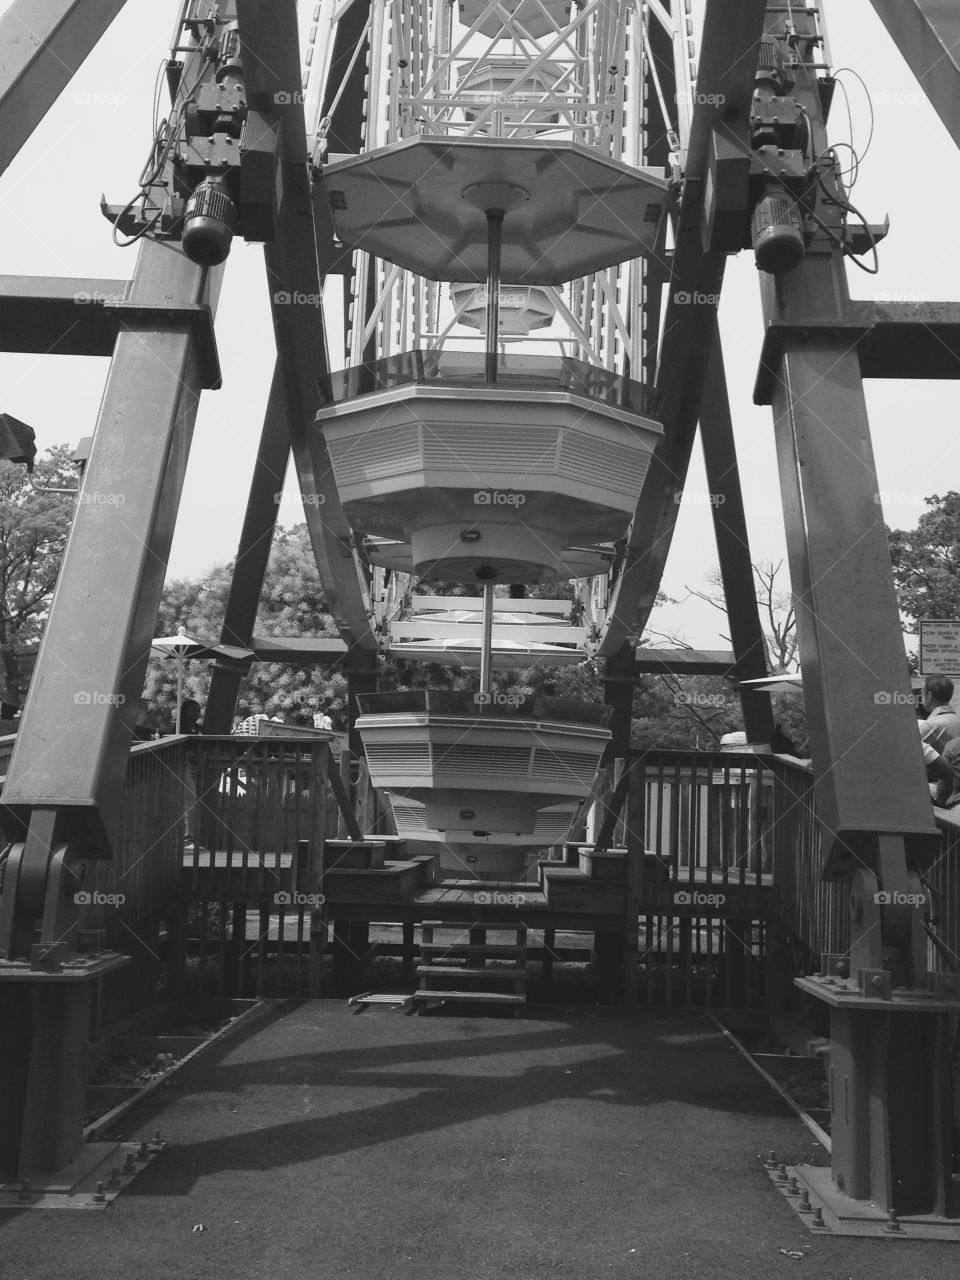 Ferris wheel. Ferris wheel rye playland NY